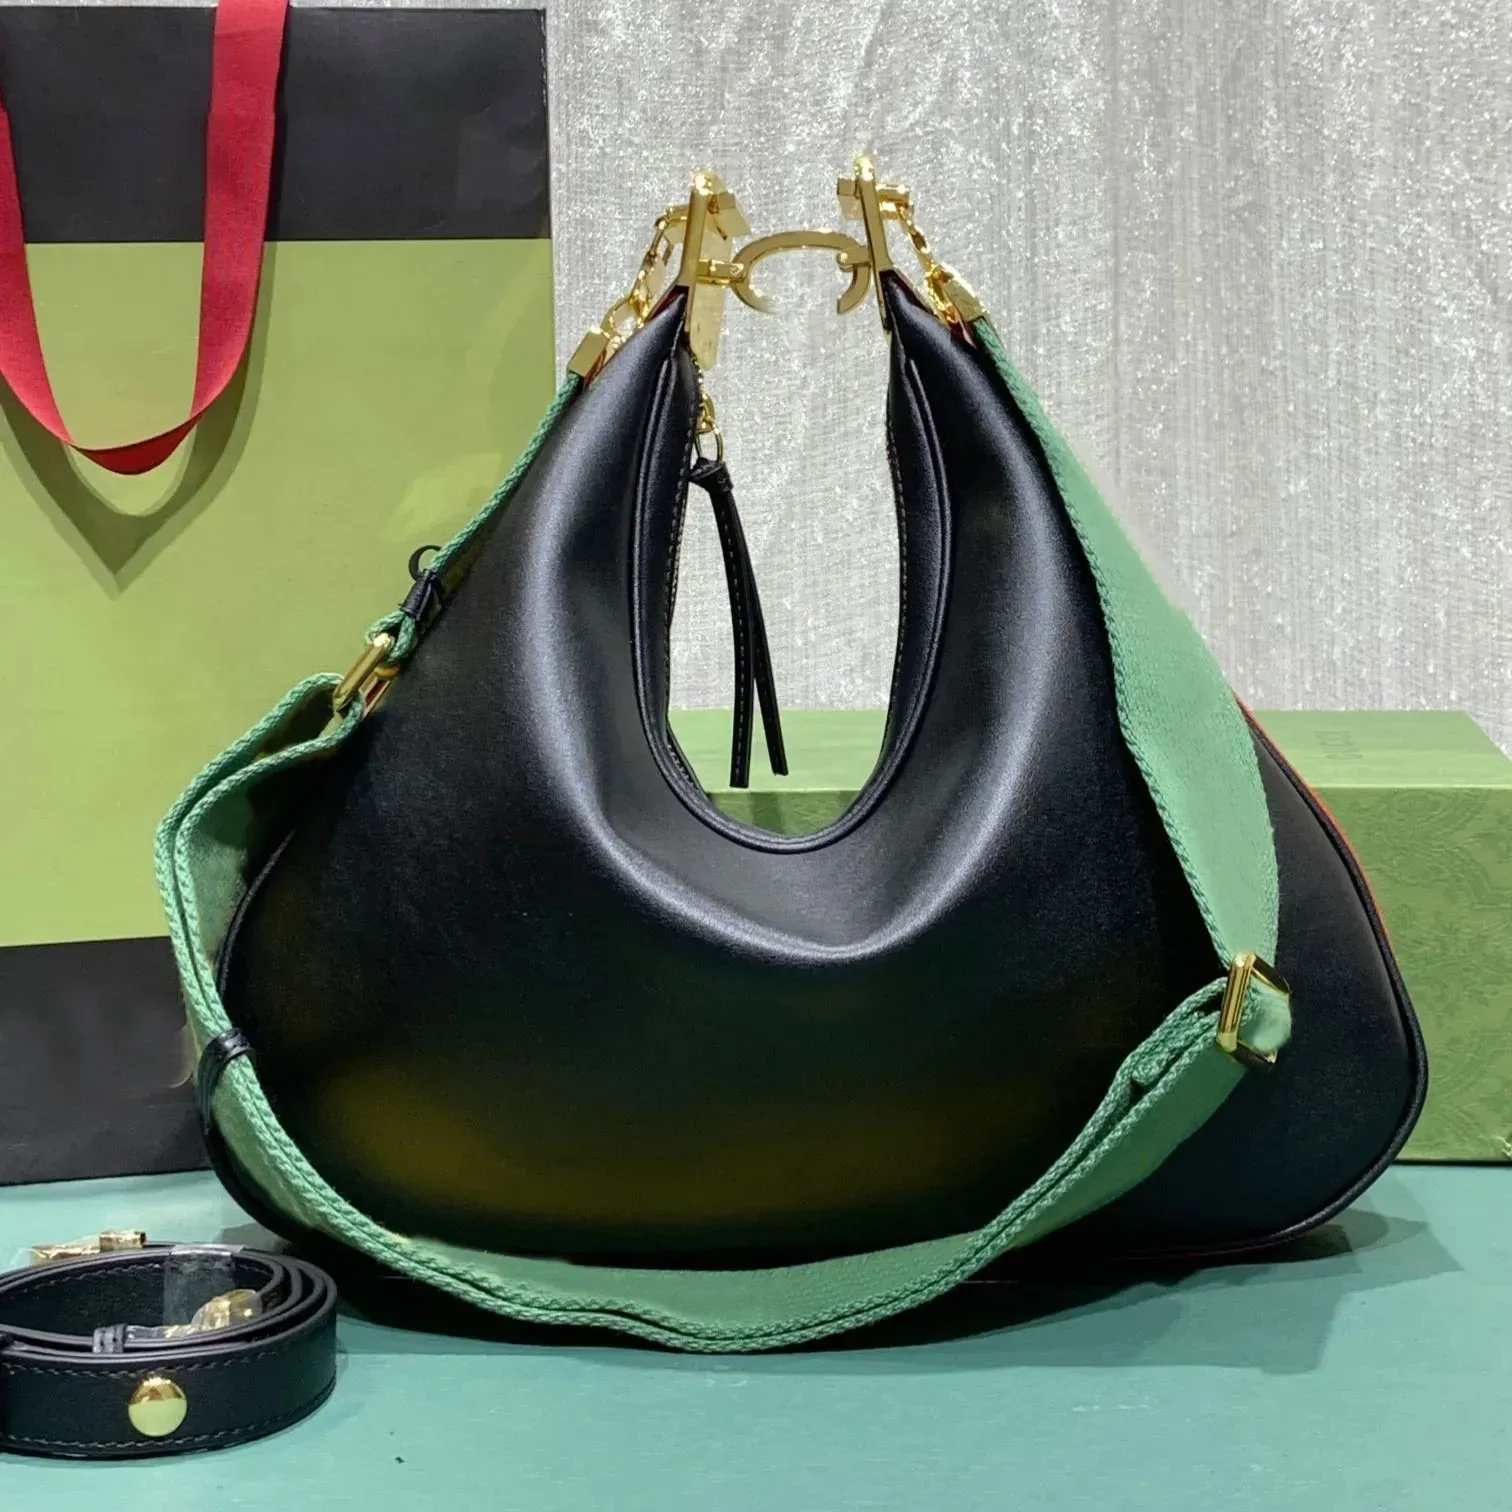 Fashion designer bag Hobos Totes women's leather shoulder bag with colorful striped nylon strap and metal brand logo hook handbag